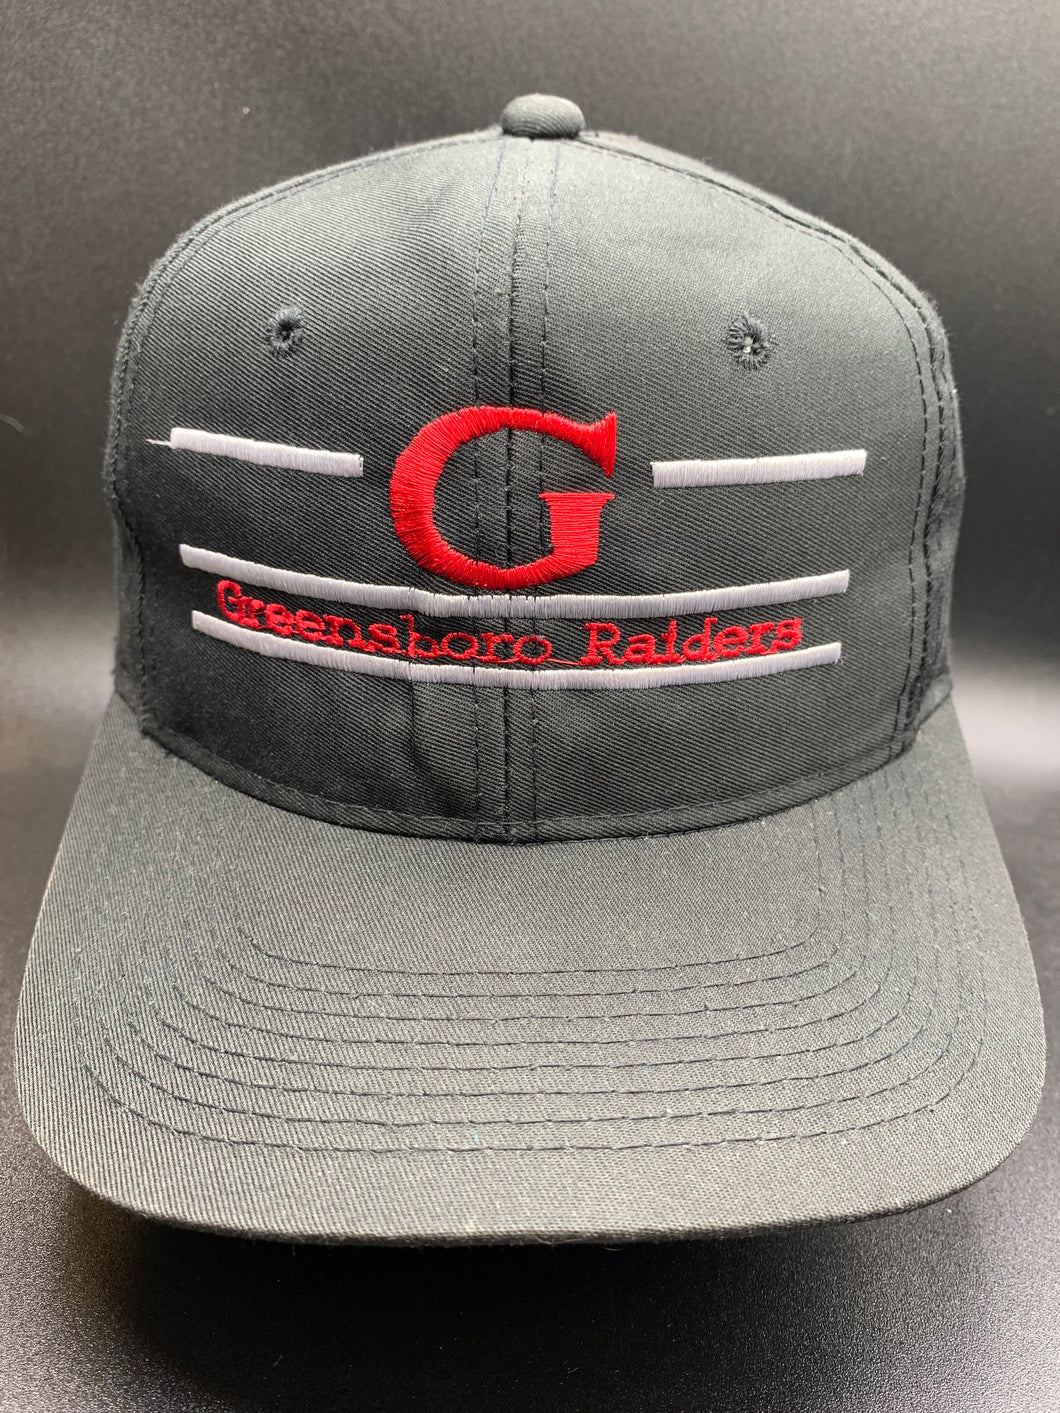 Vintage Split Bar Greensboro Raiders Snapback Hat